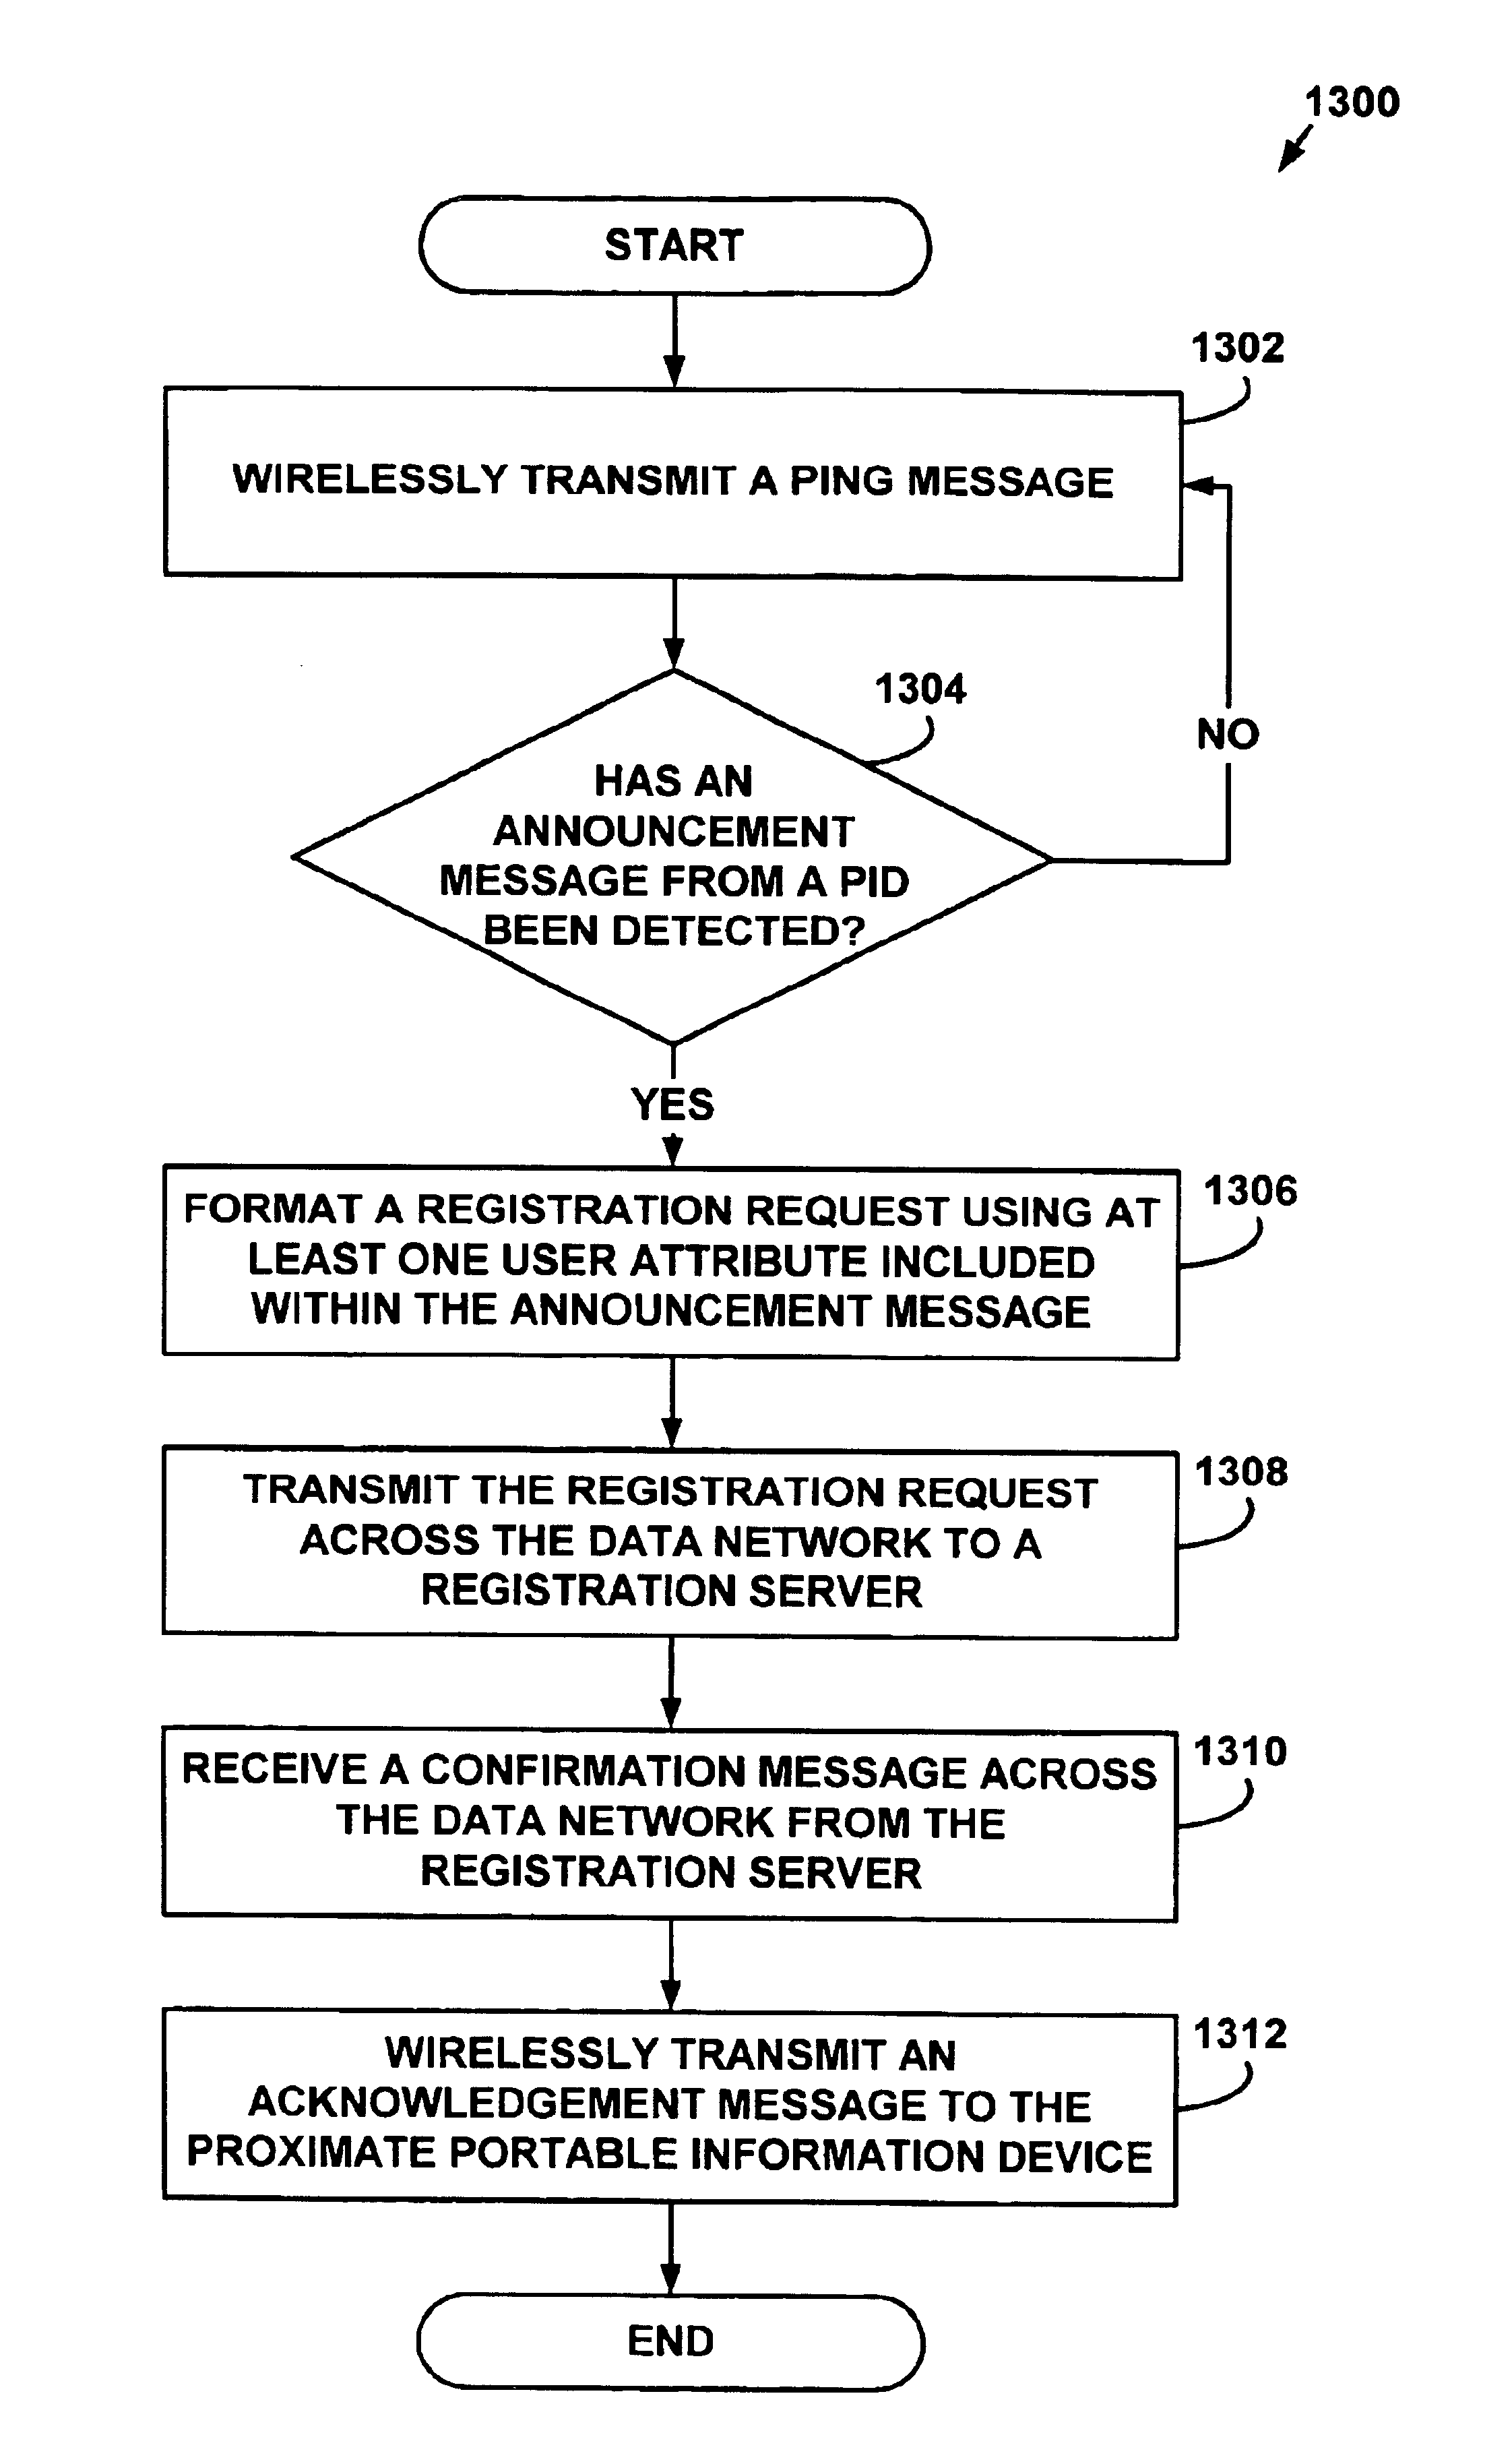 Proximity-based registration on a data network telephony system